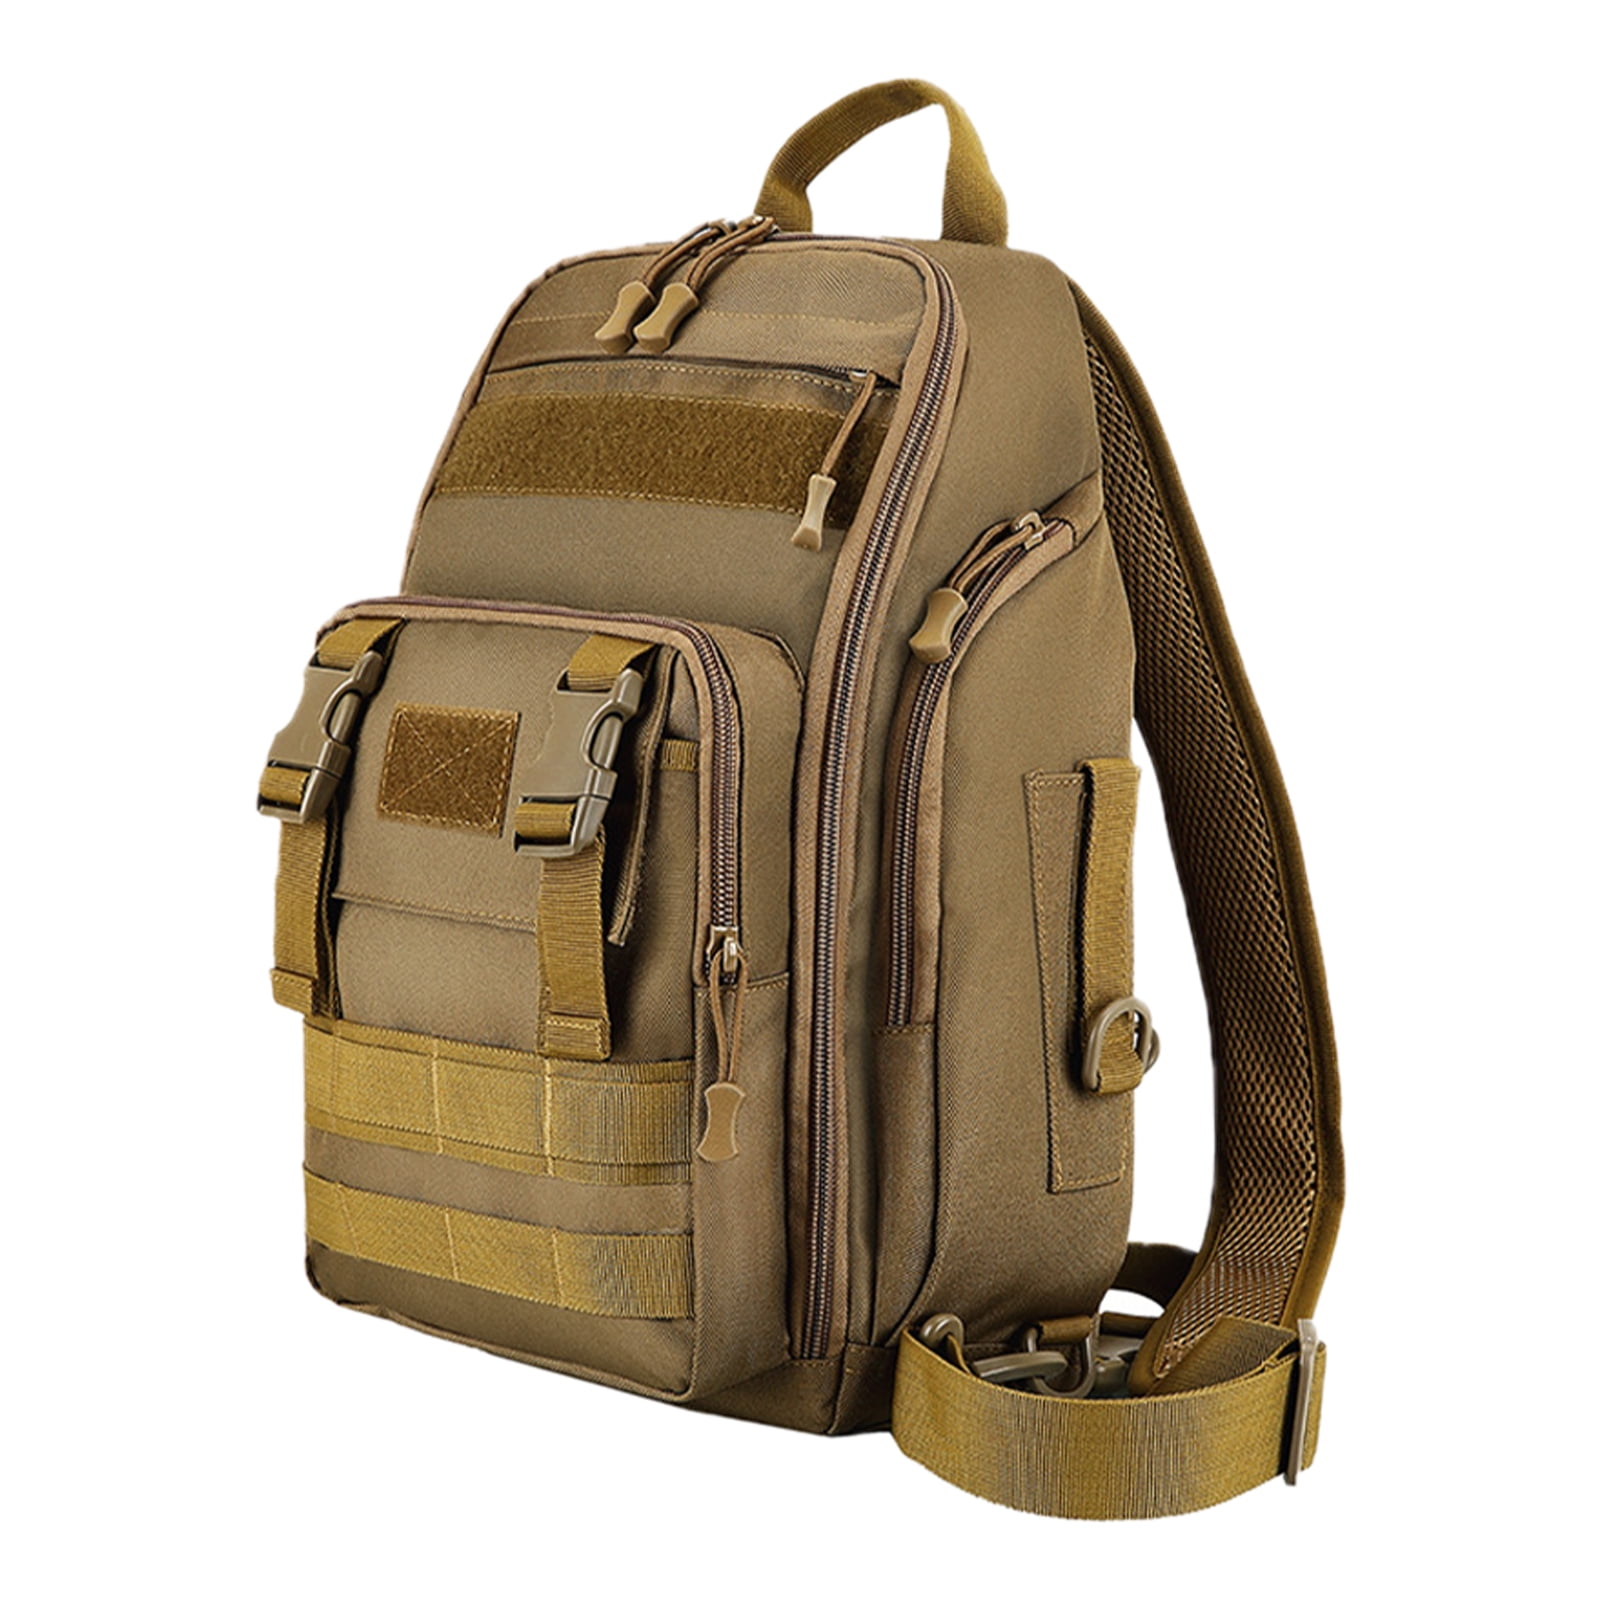 Dioche Fishing Bag,Fishing Tactical Rucksack,Multifunctional Outdoor Sports Hiking Travel Shoulder Bag 